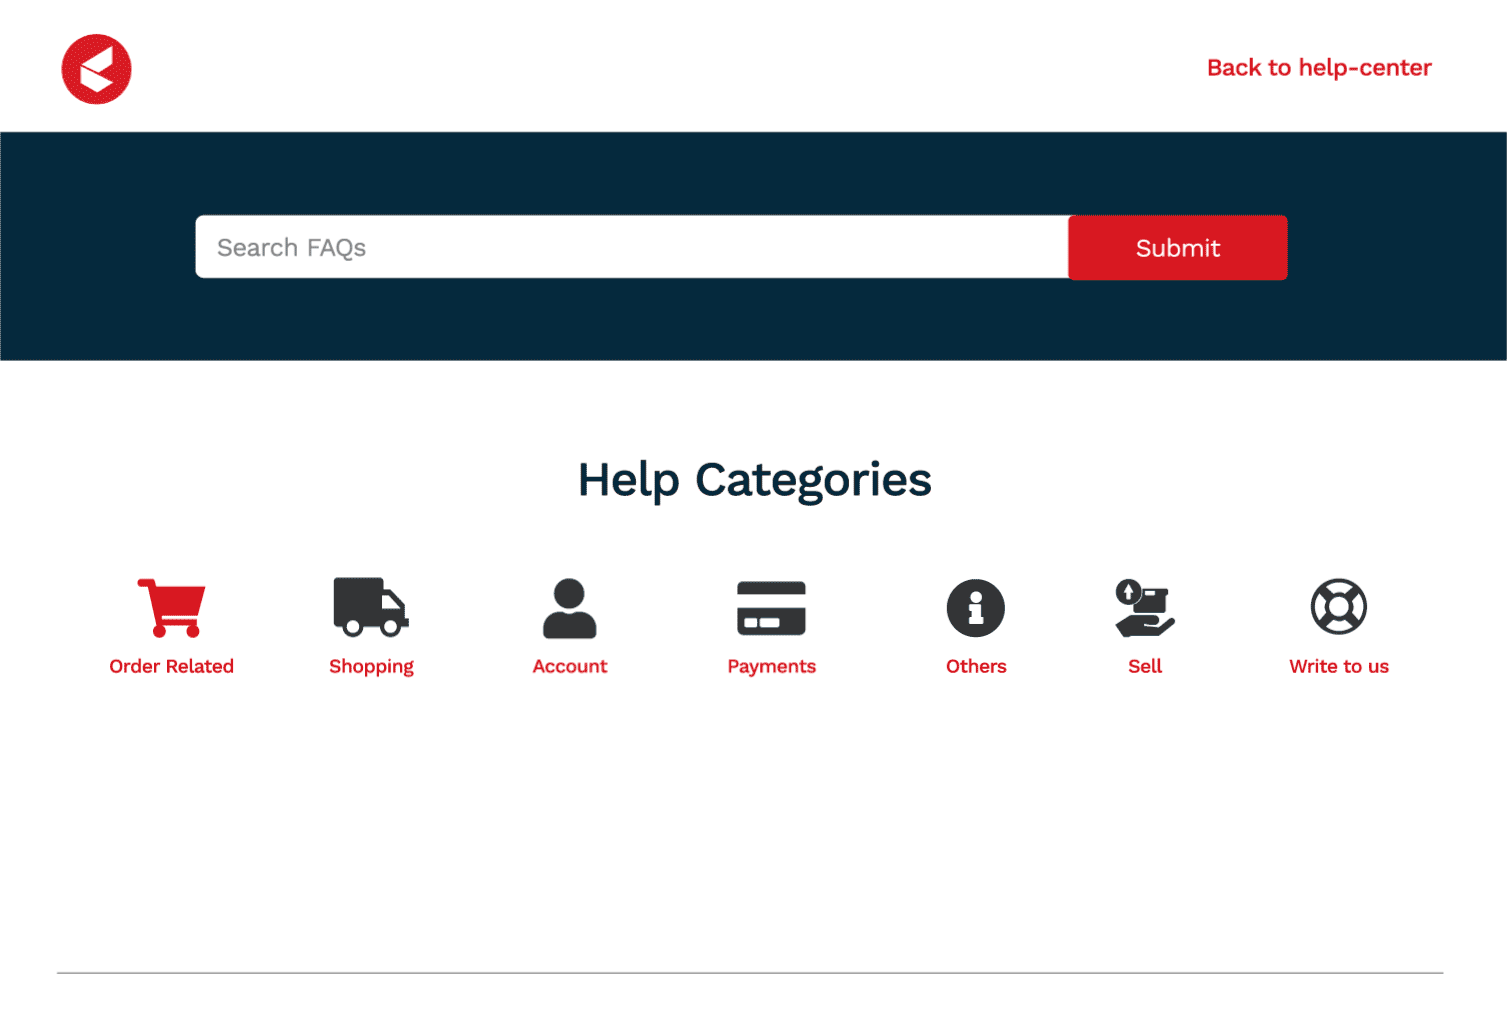 Customer Self-service portal